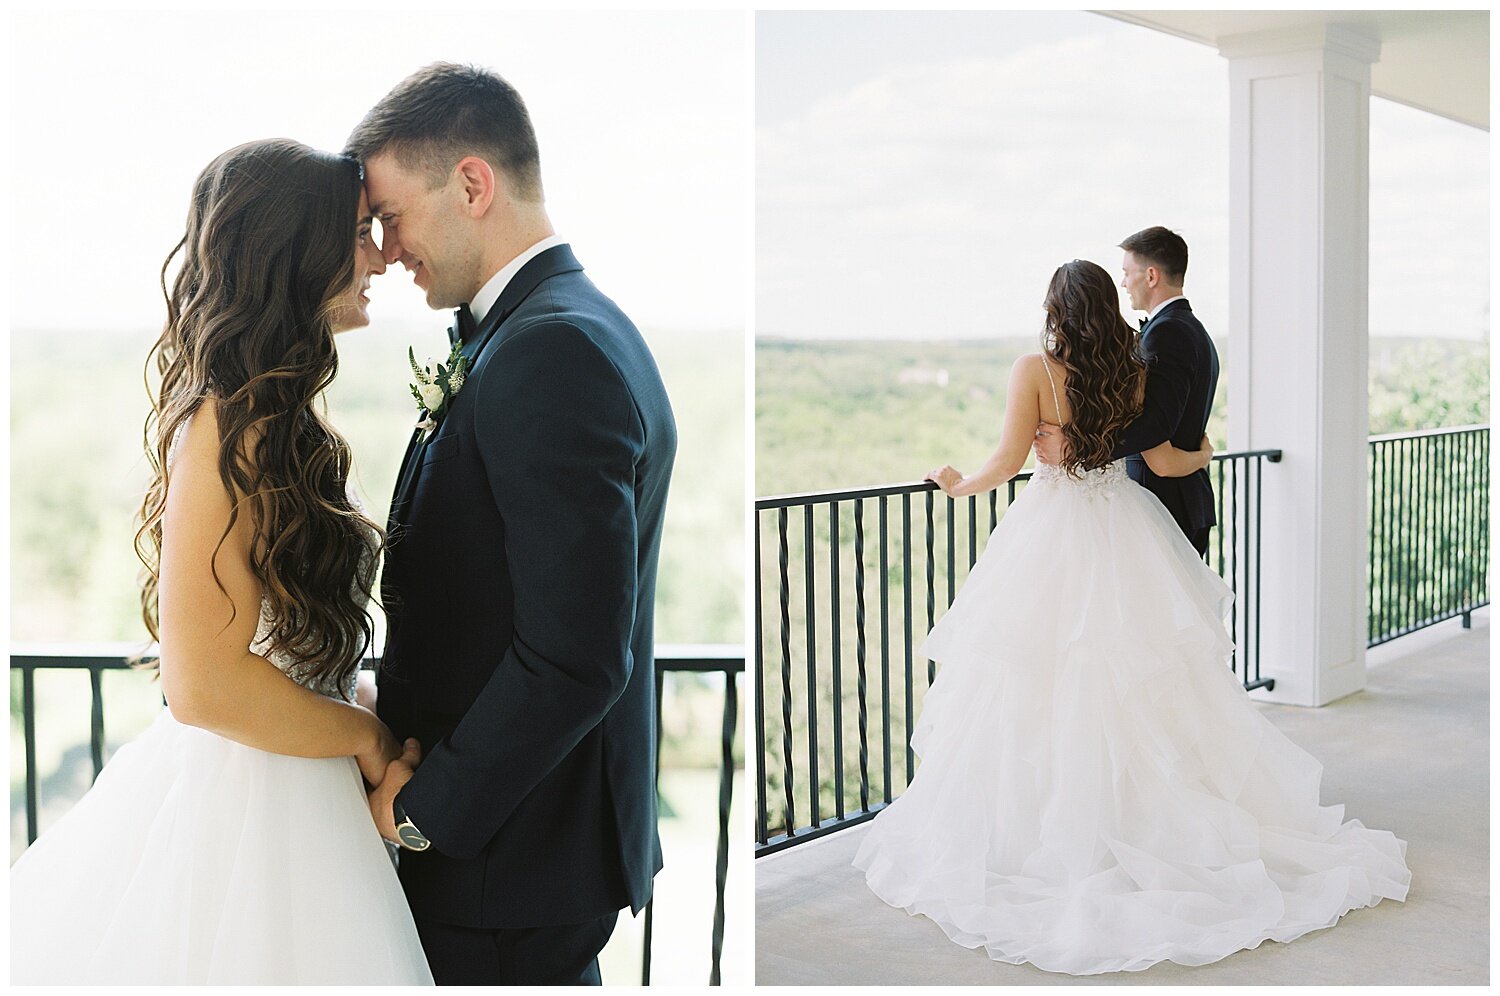 Kendall Point - Boerne TX Wedding Photography15.jpg